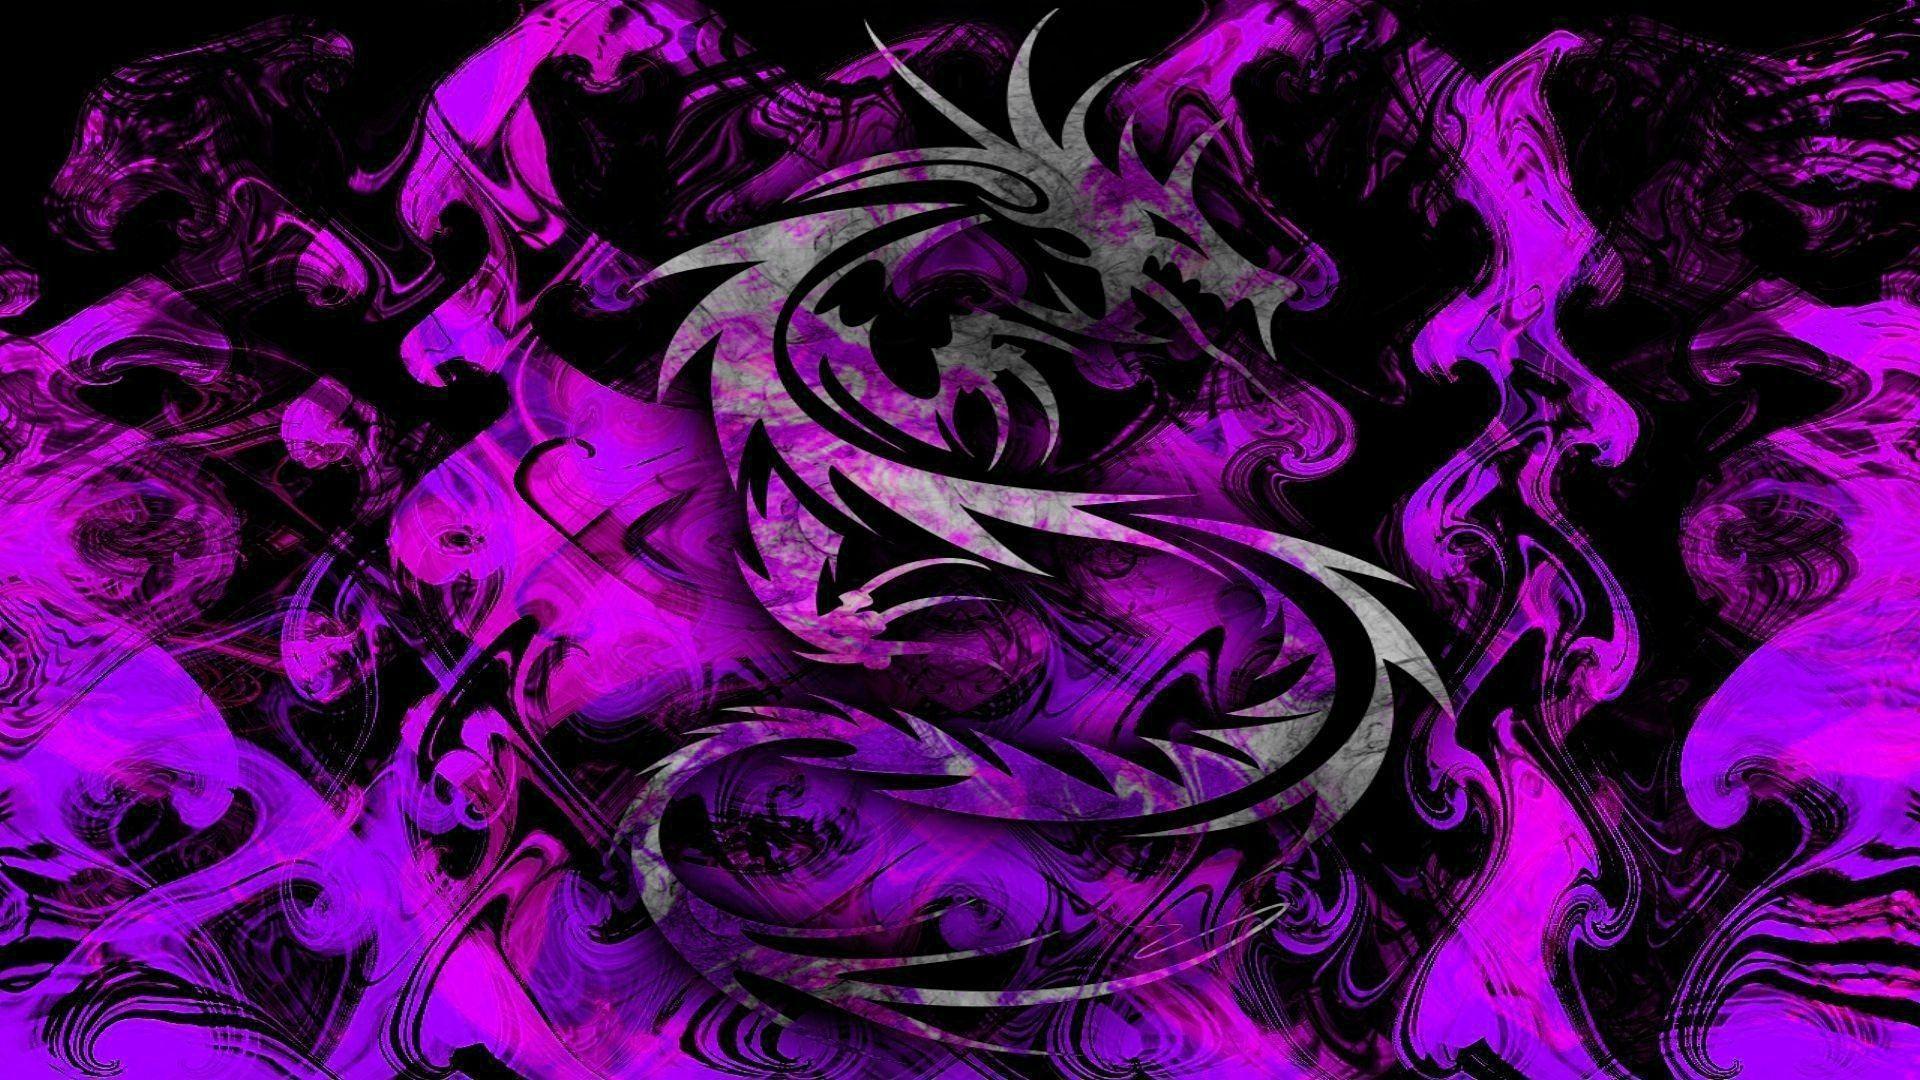 Purple Dragons Wallpaper